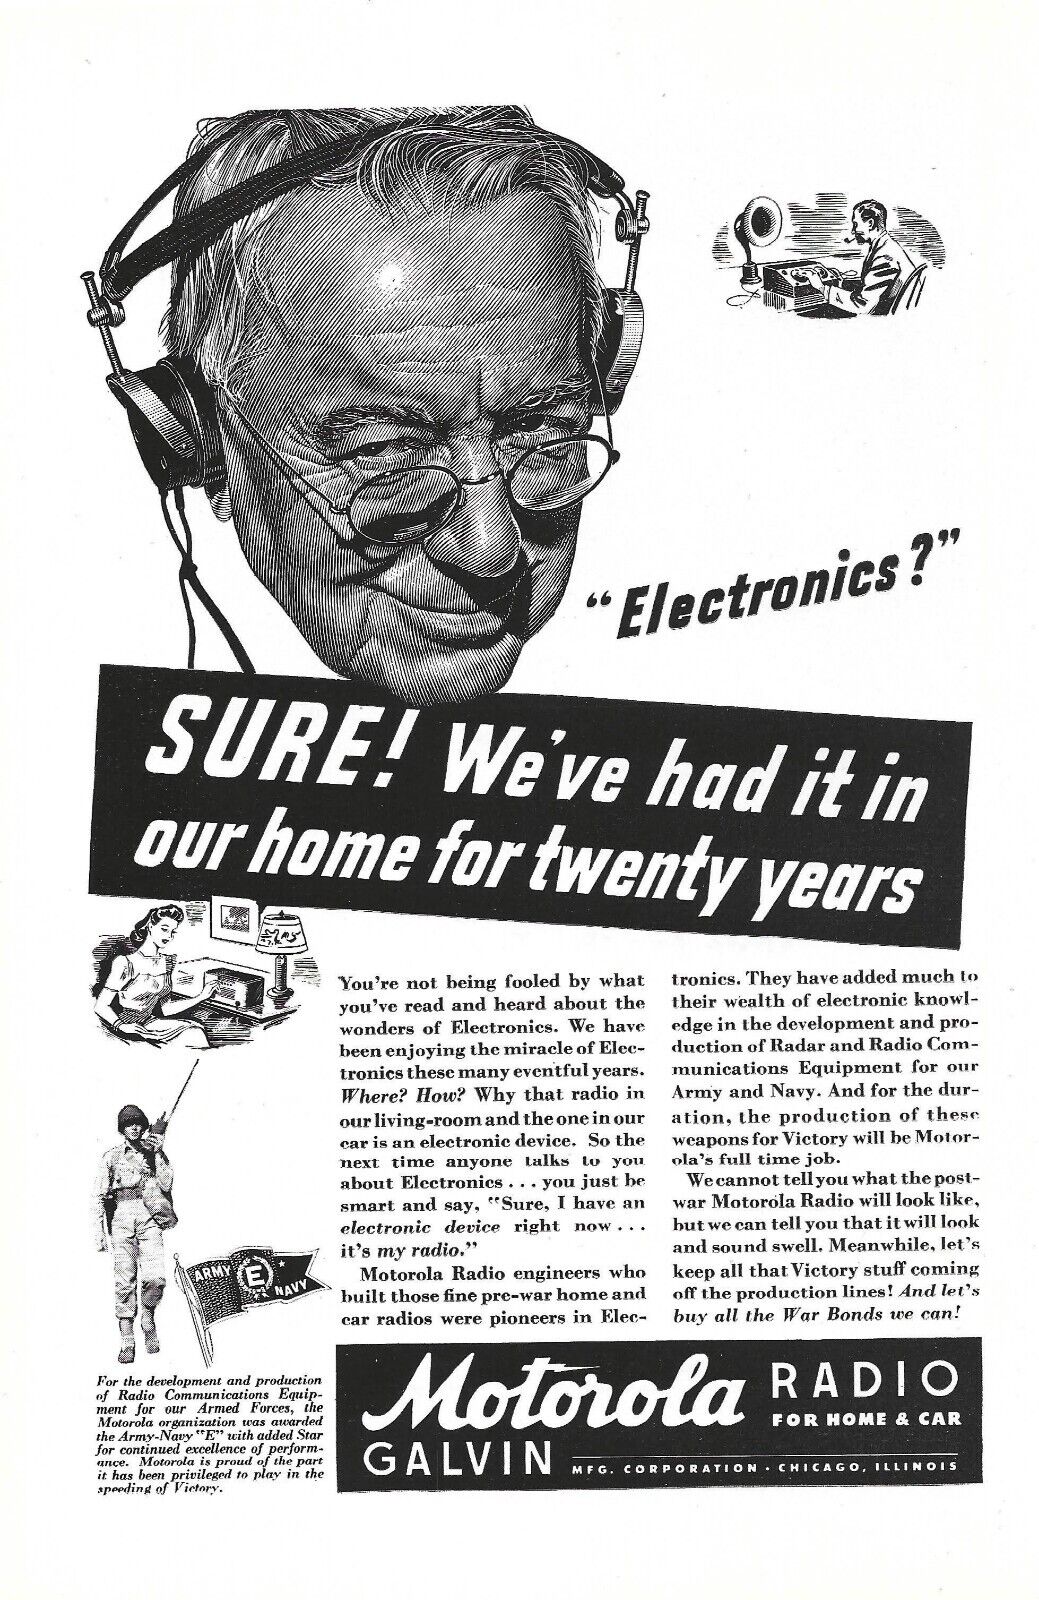 1943 Motorola Radio For Home And Car Vintage Print Ad Ephemera